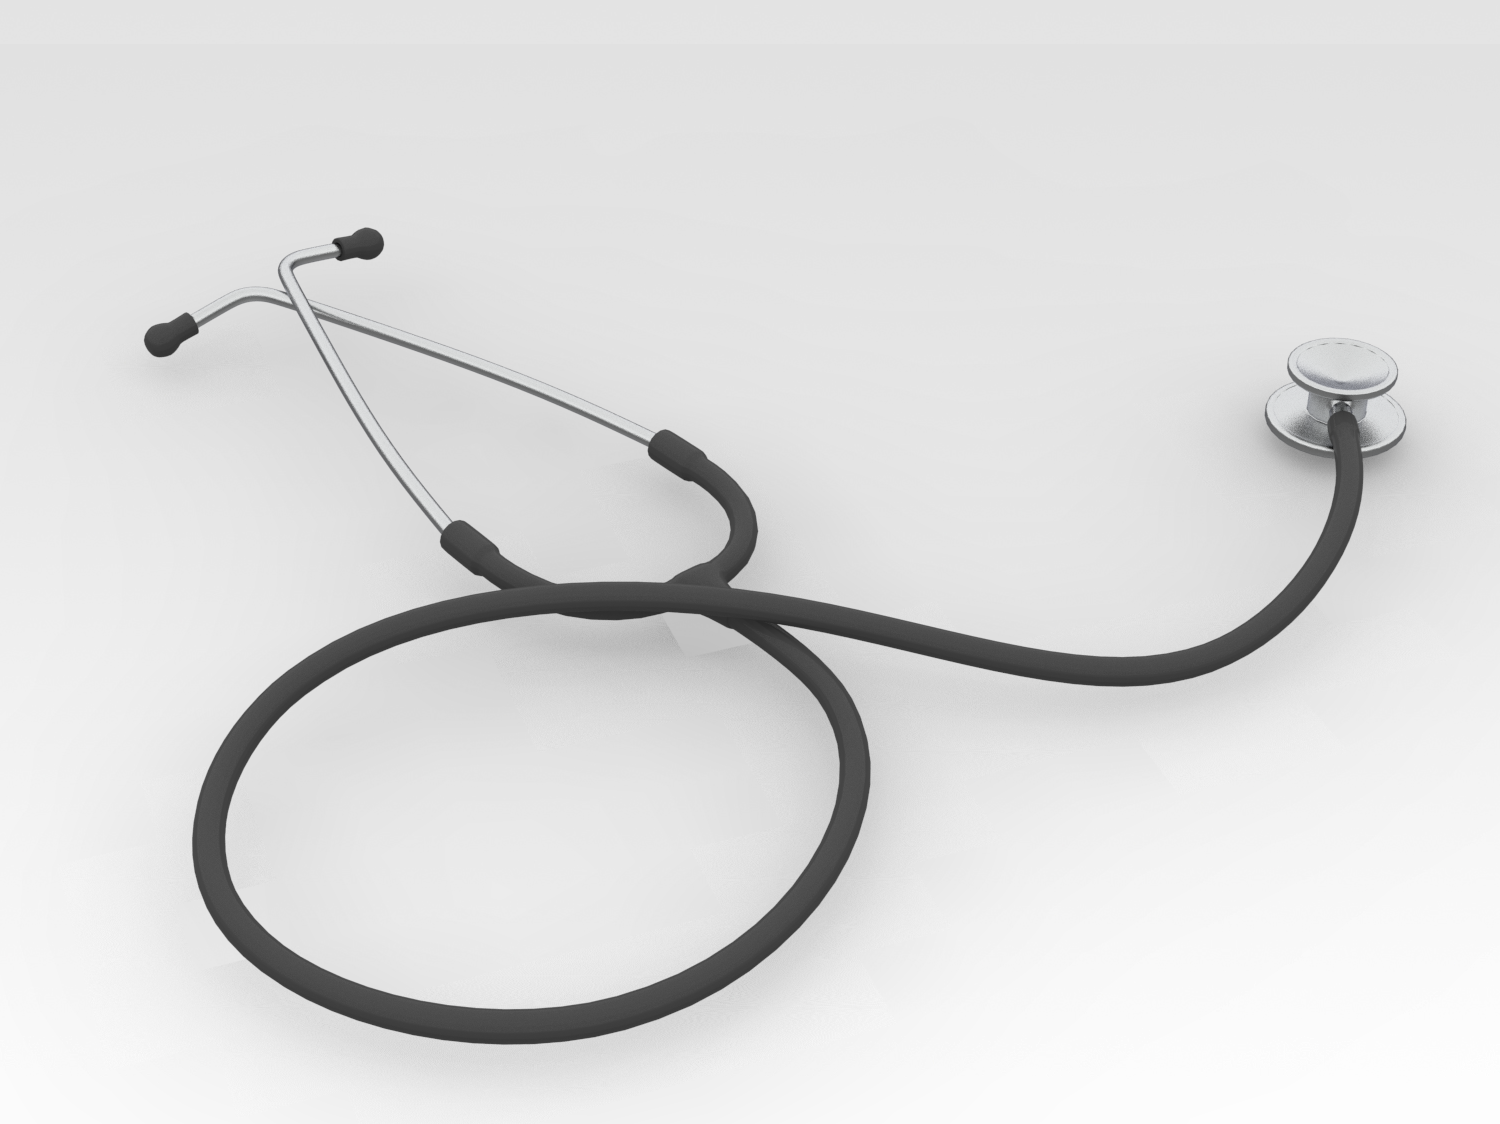 Stethoscope 3D Model in Medical Equipment 3DExport